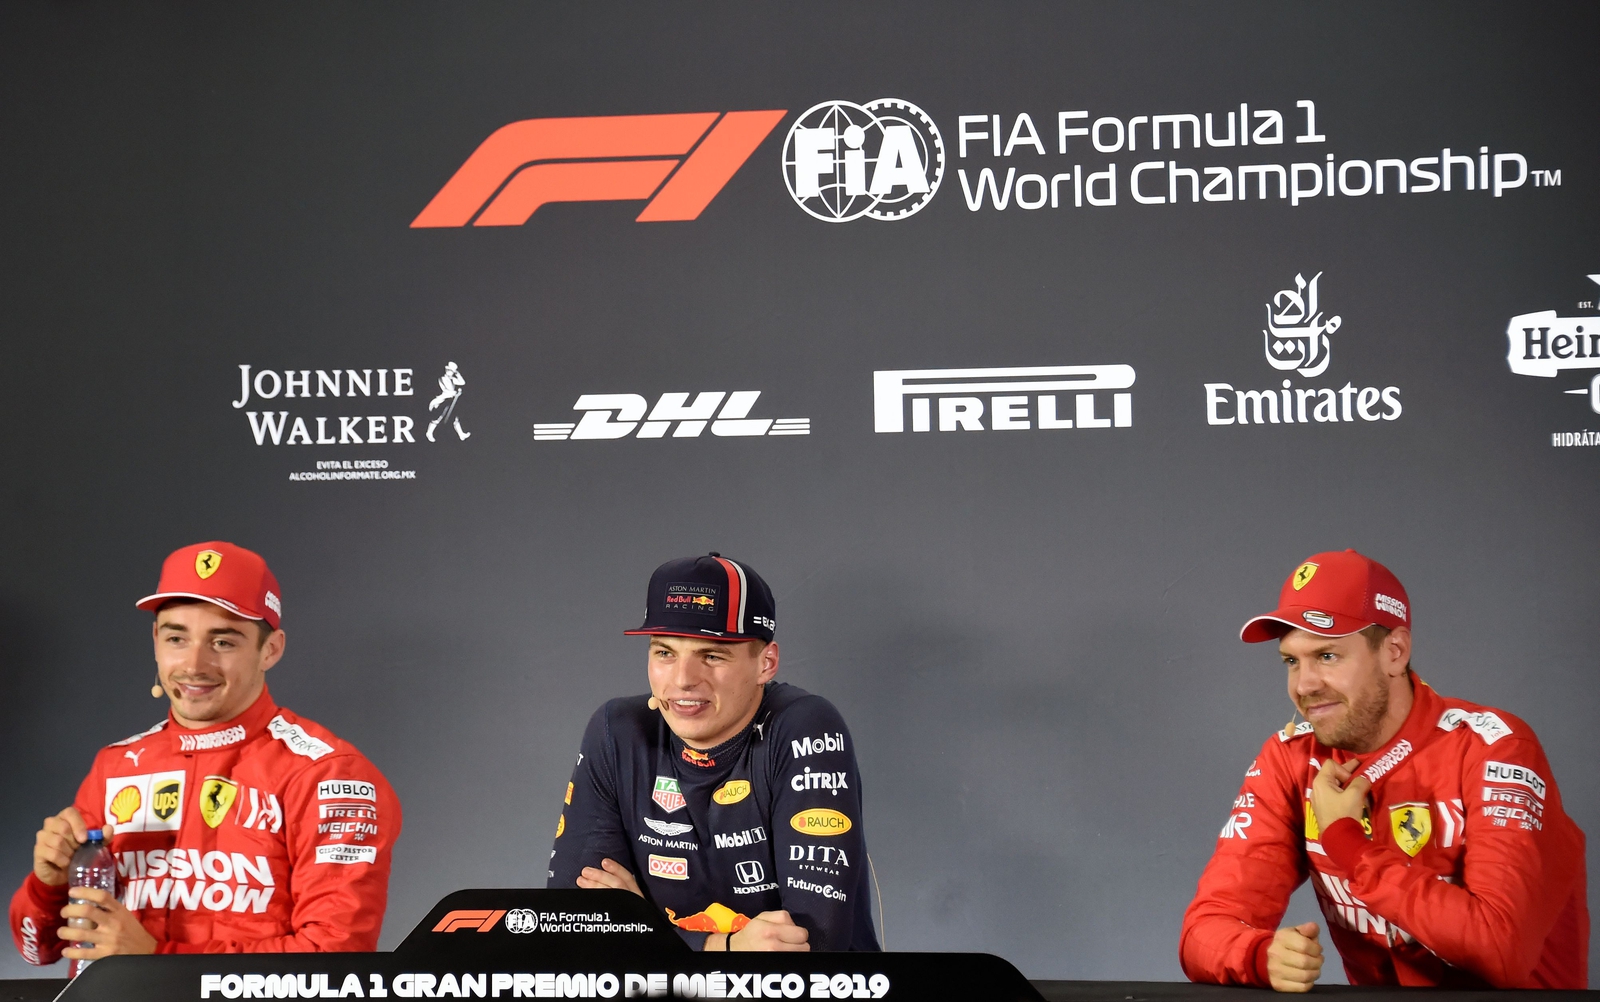 Image - (L to R) Leclerc, Verstappen and Vettel